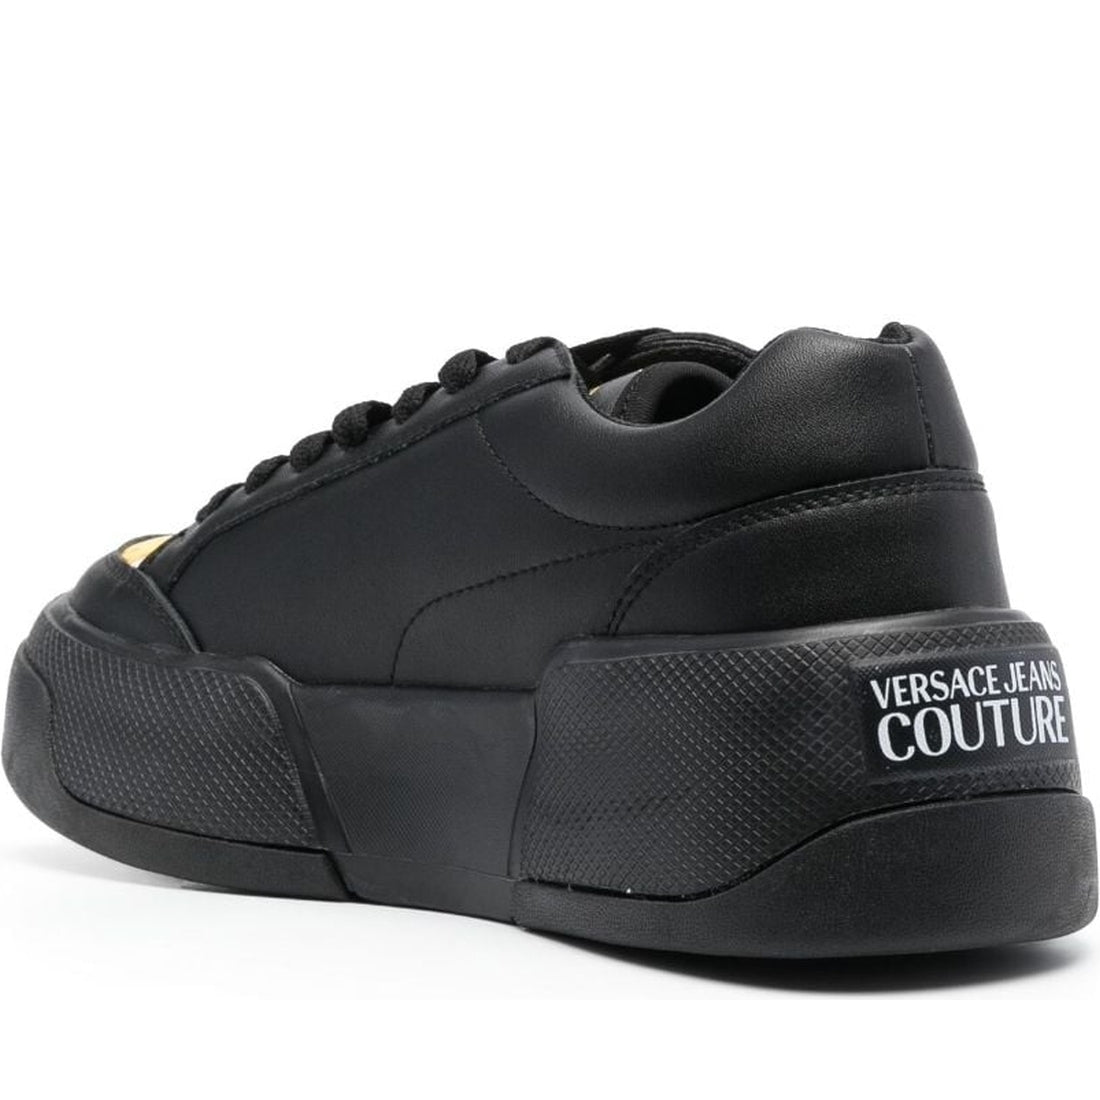 Versace Jeans Couture womens black, gold ravewing sneakers | Vilbury London